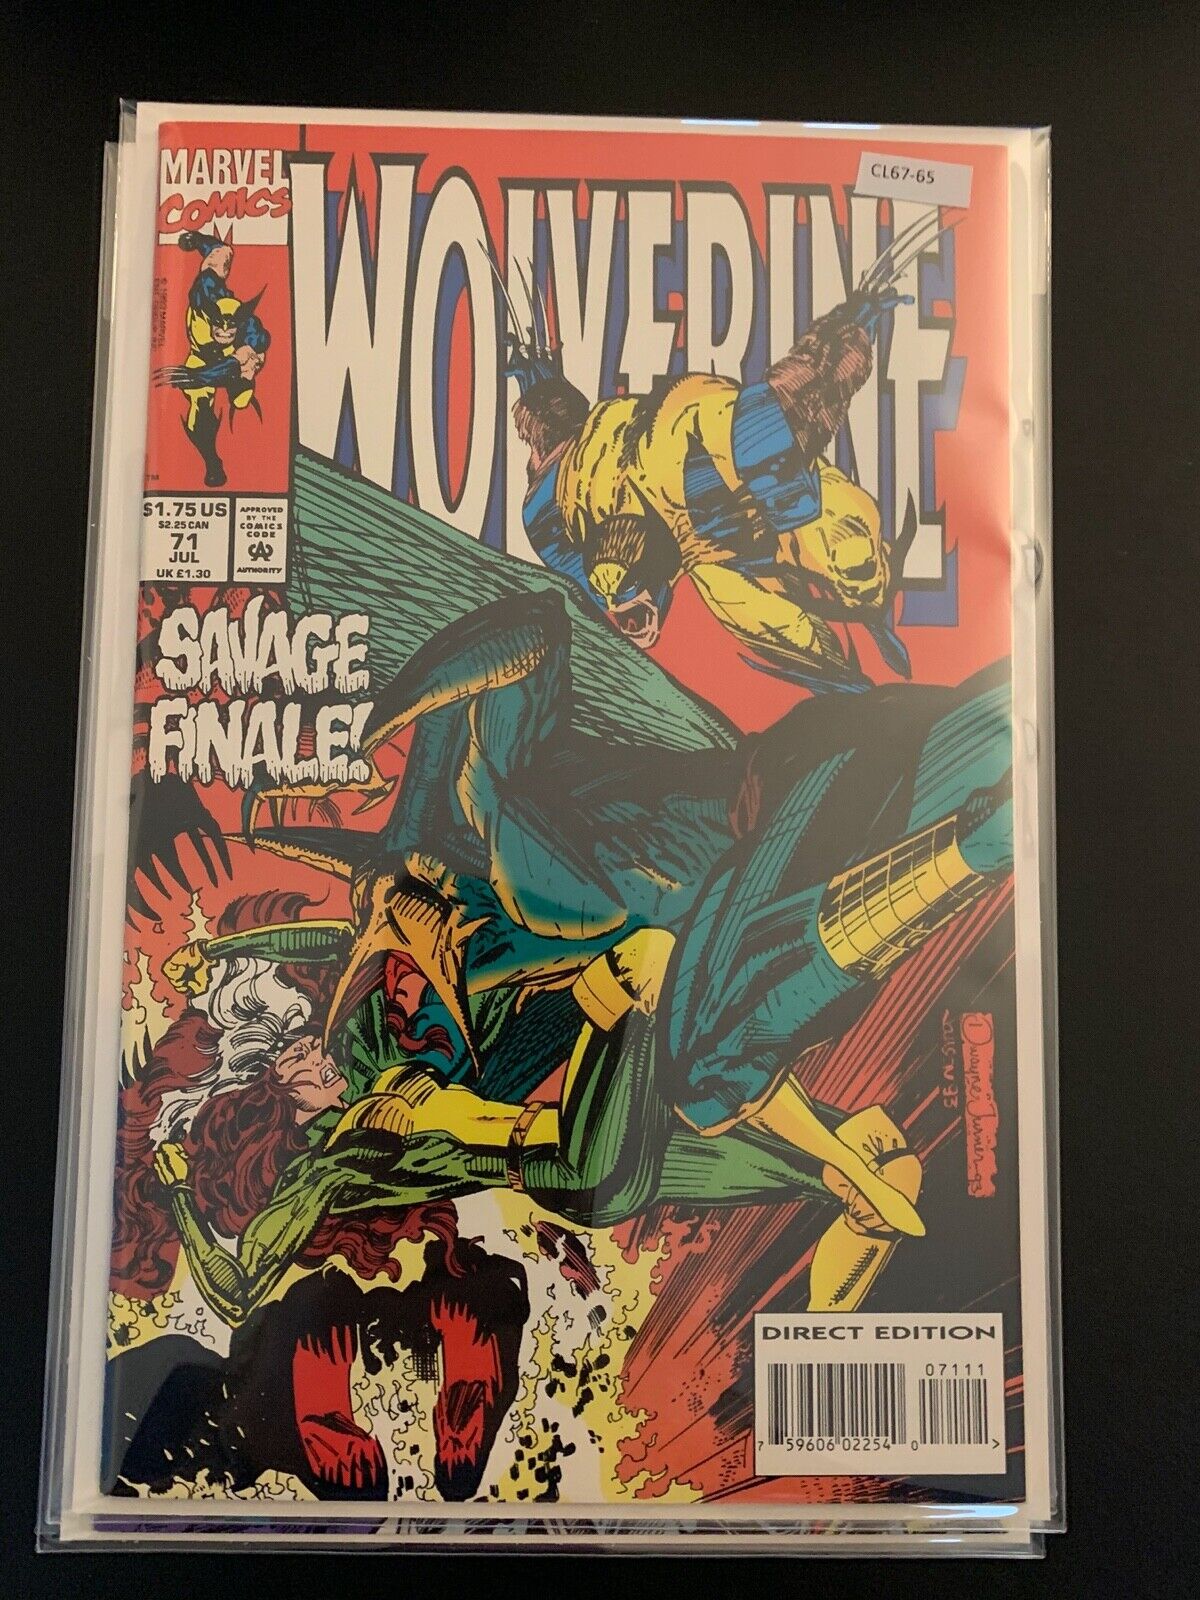 Wolverine #71 Gem Mint Uncirculated Marvel Comic Book CL67-65